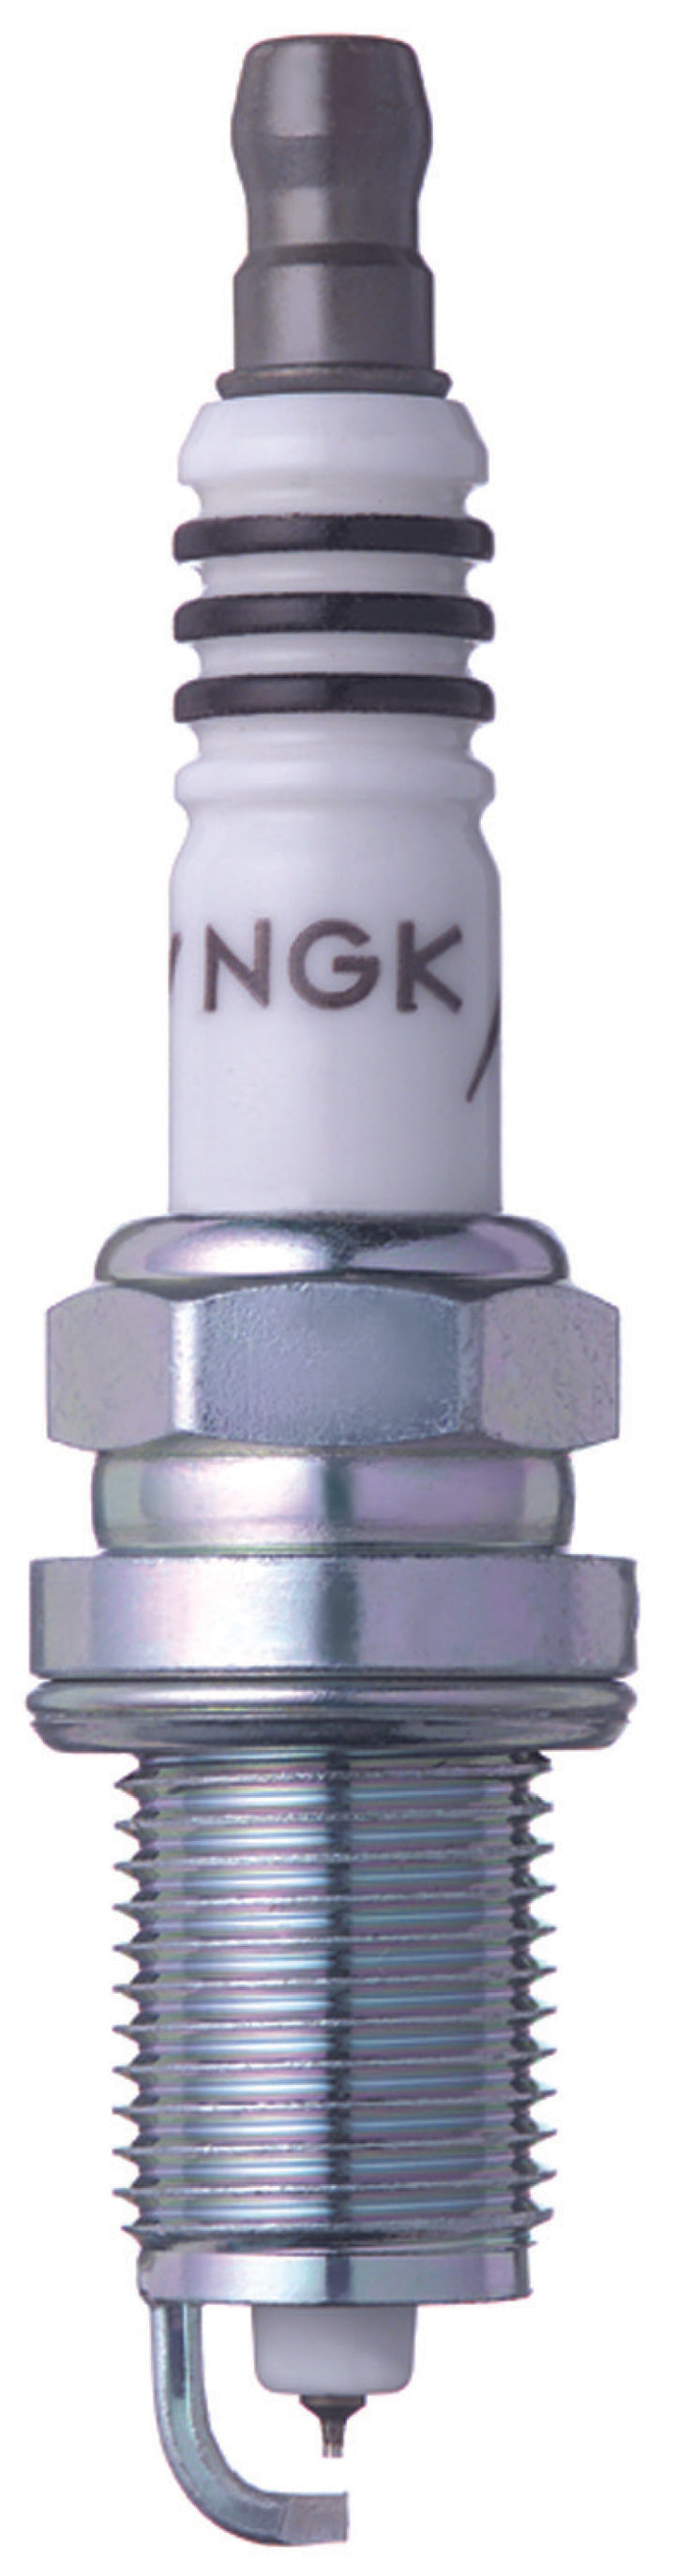 NGK Iridium Spark Plug Box of 4 (ZFR6FIX-11).